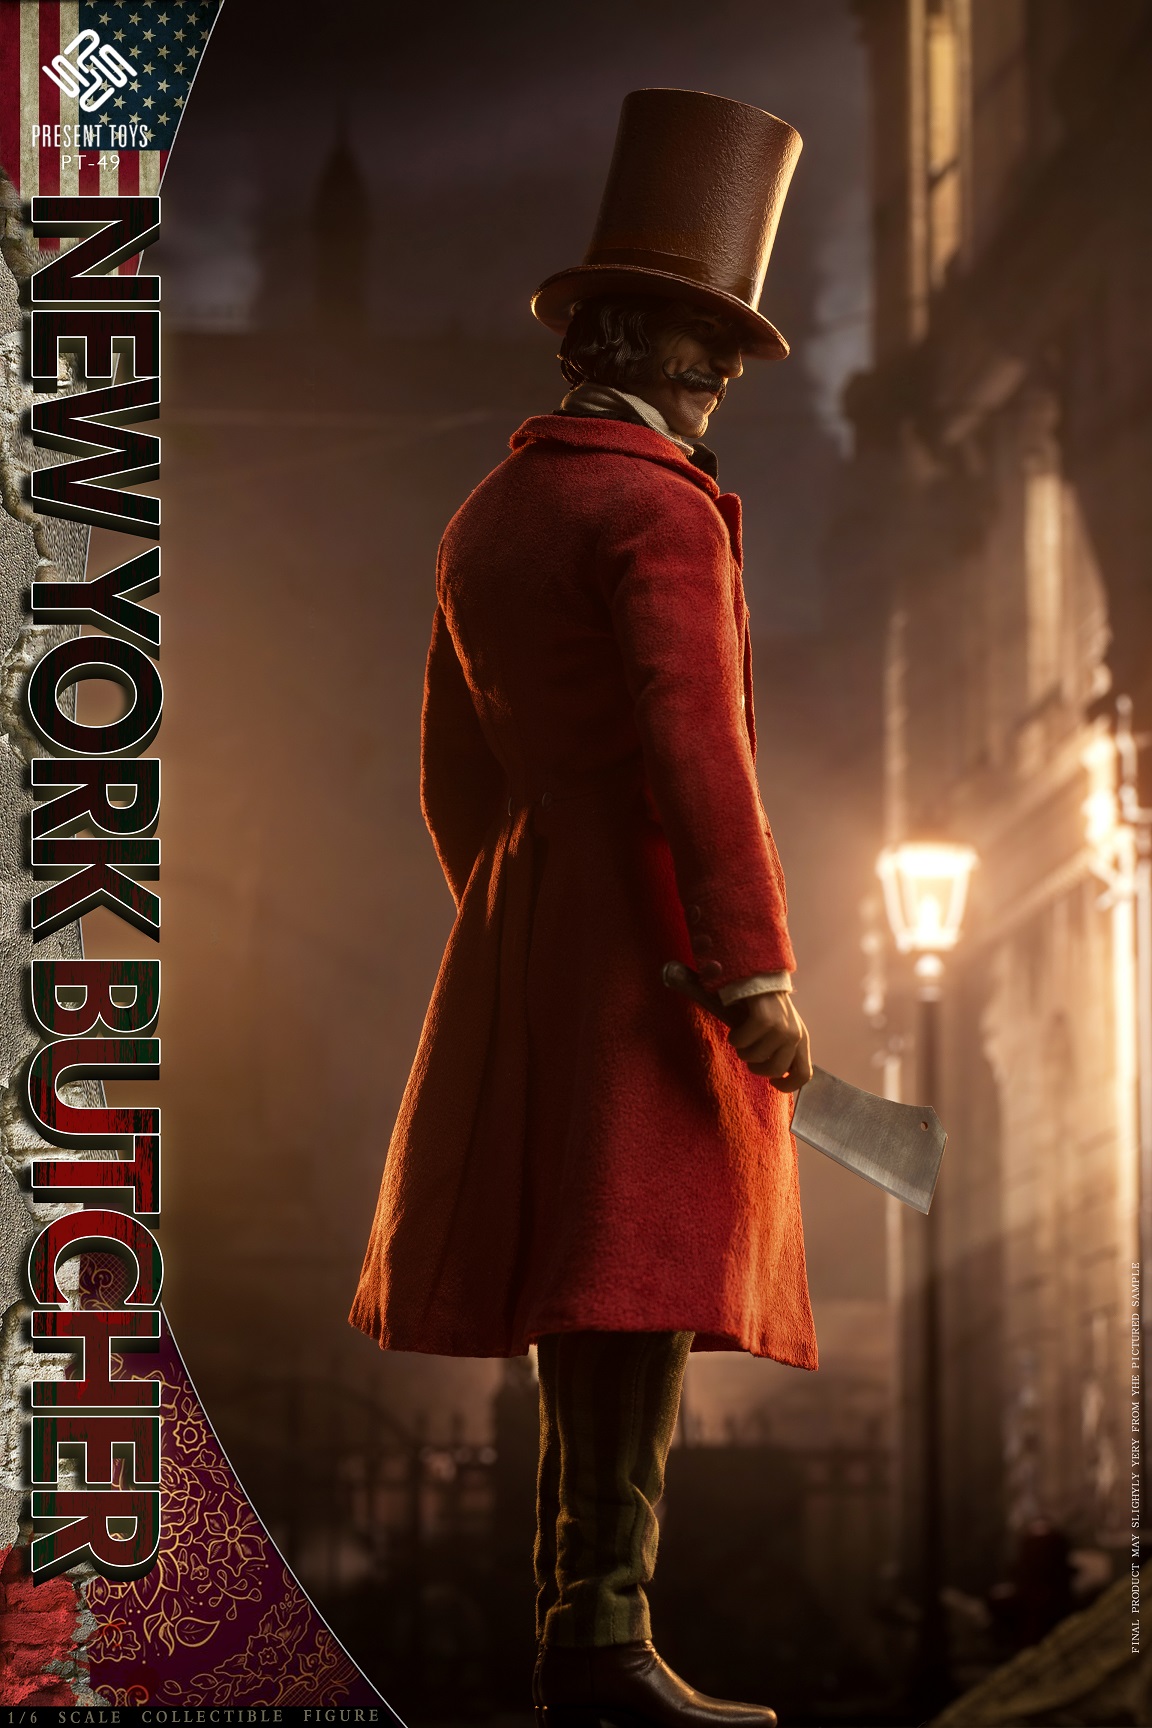 New York Butcher - Red coat Version